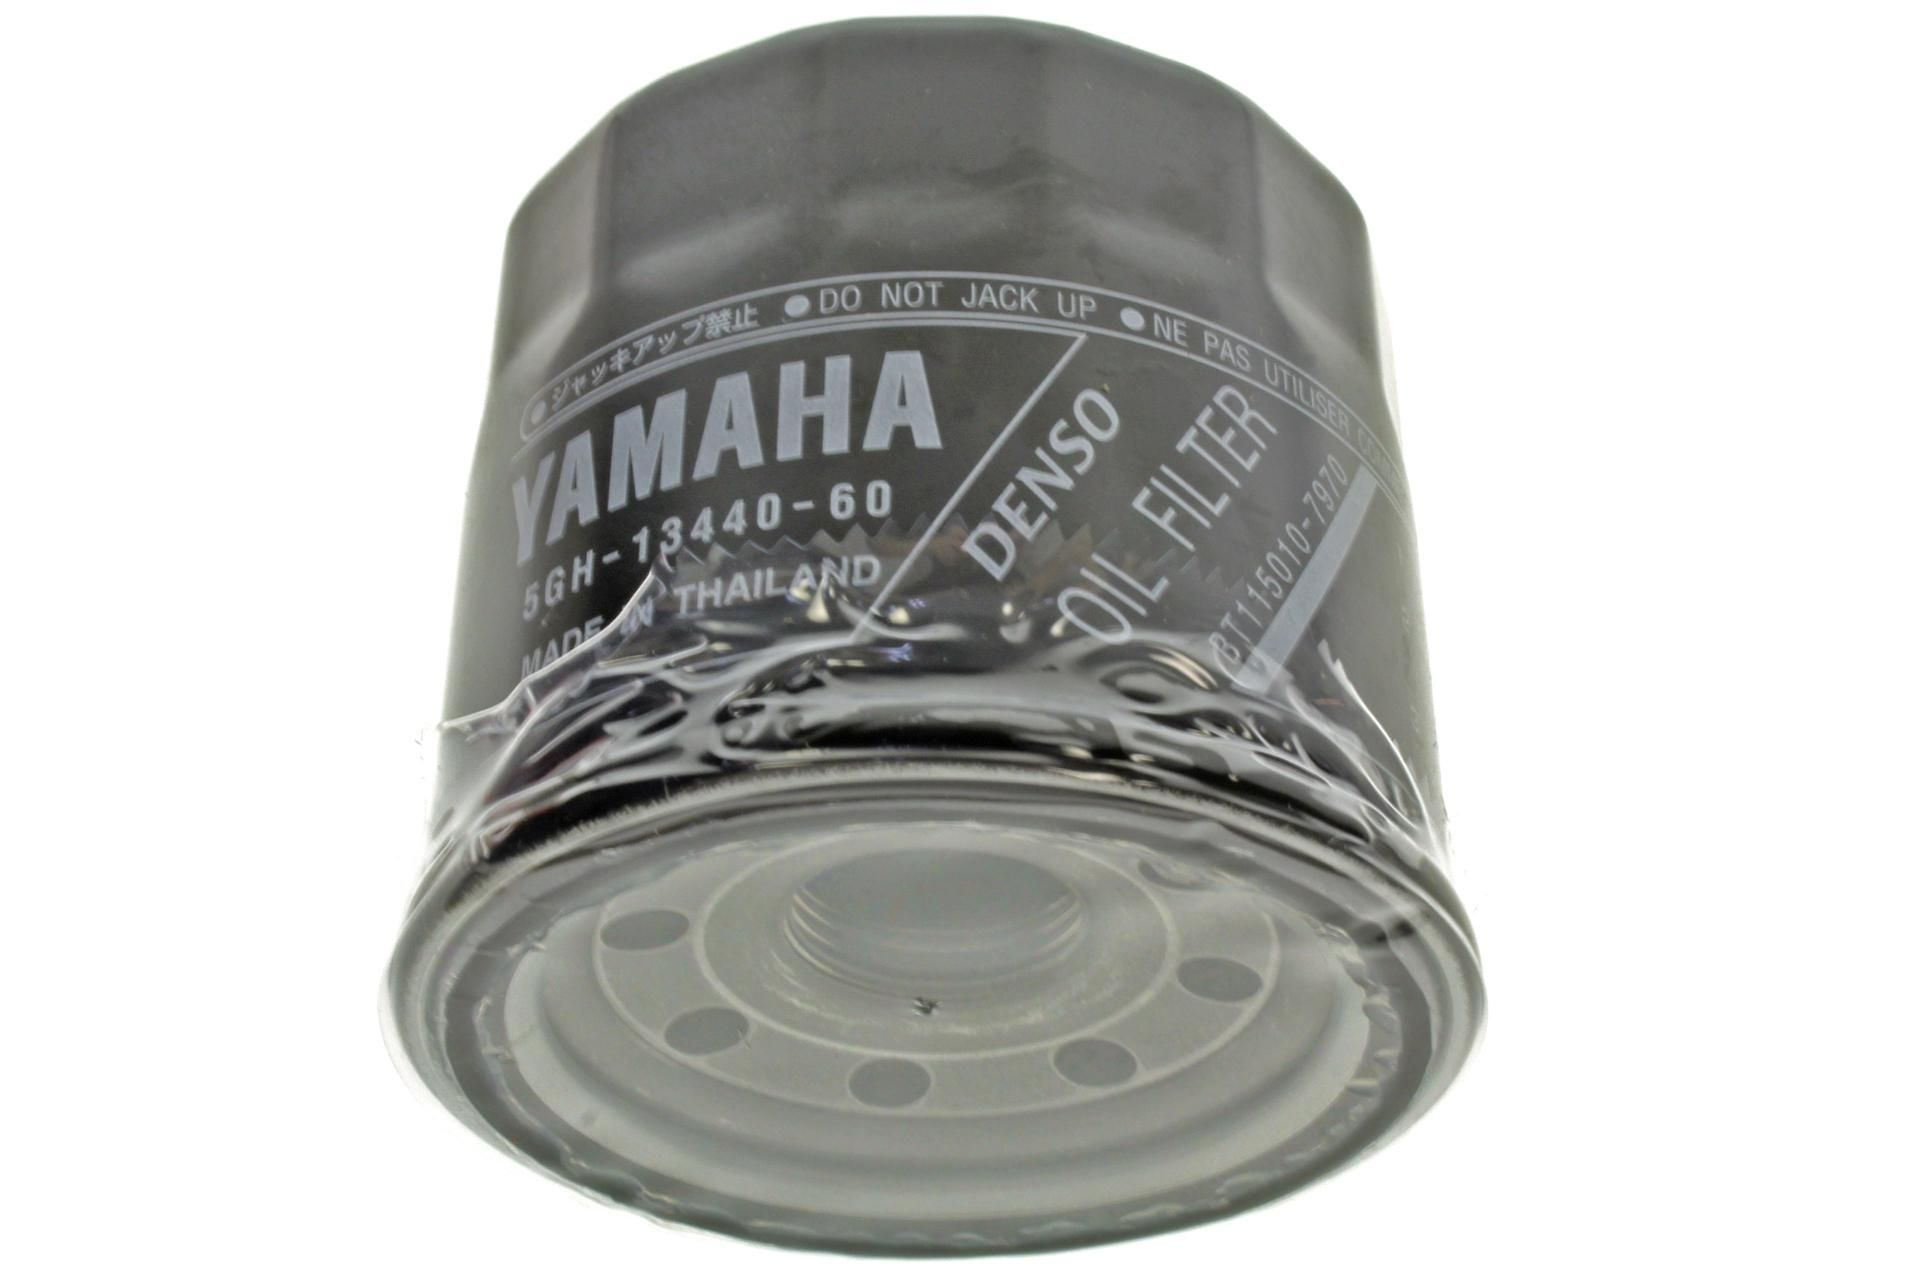 Yamaha 5GH-13440-60-00 - OIL CLEANER FILTER | Partzilla.com